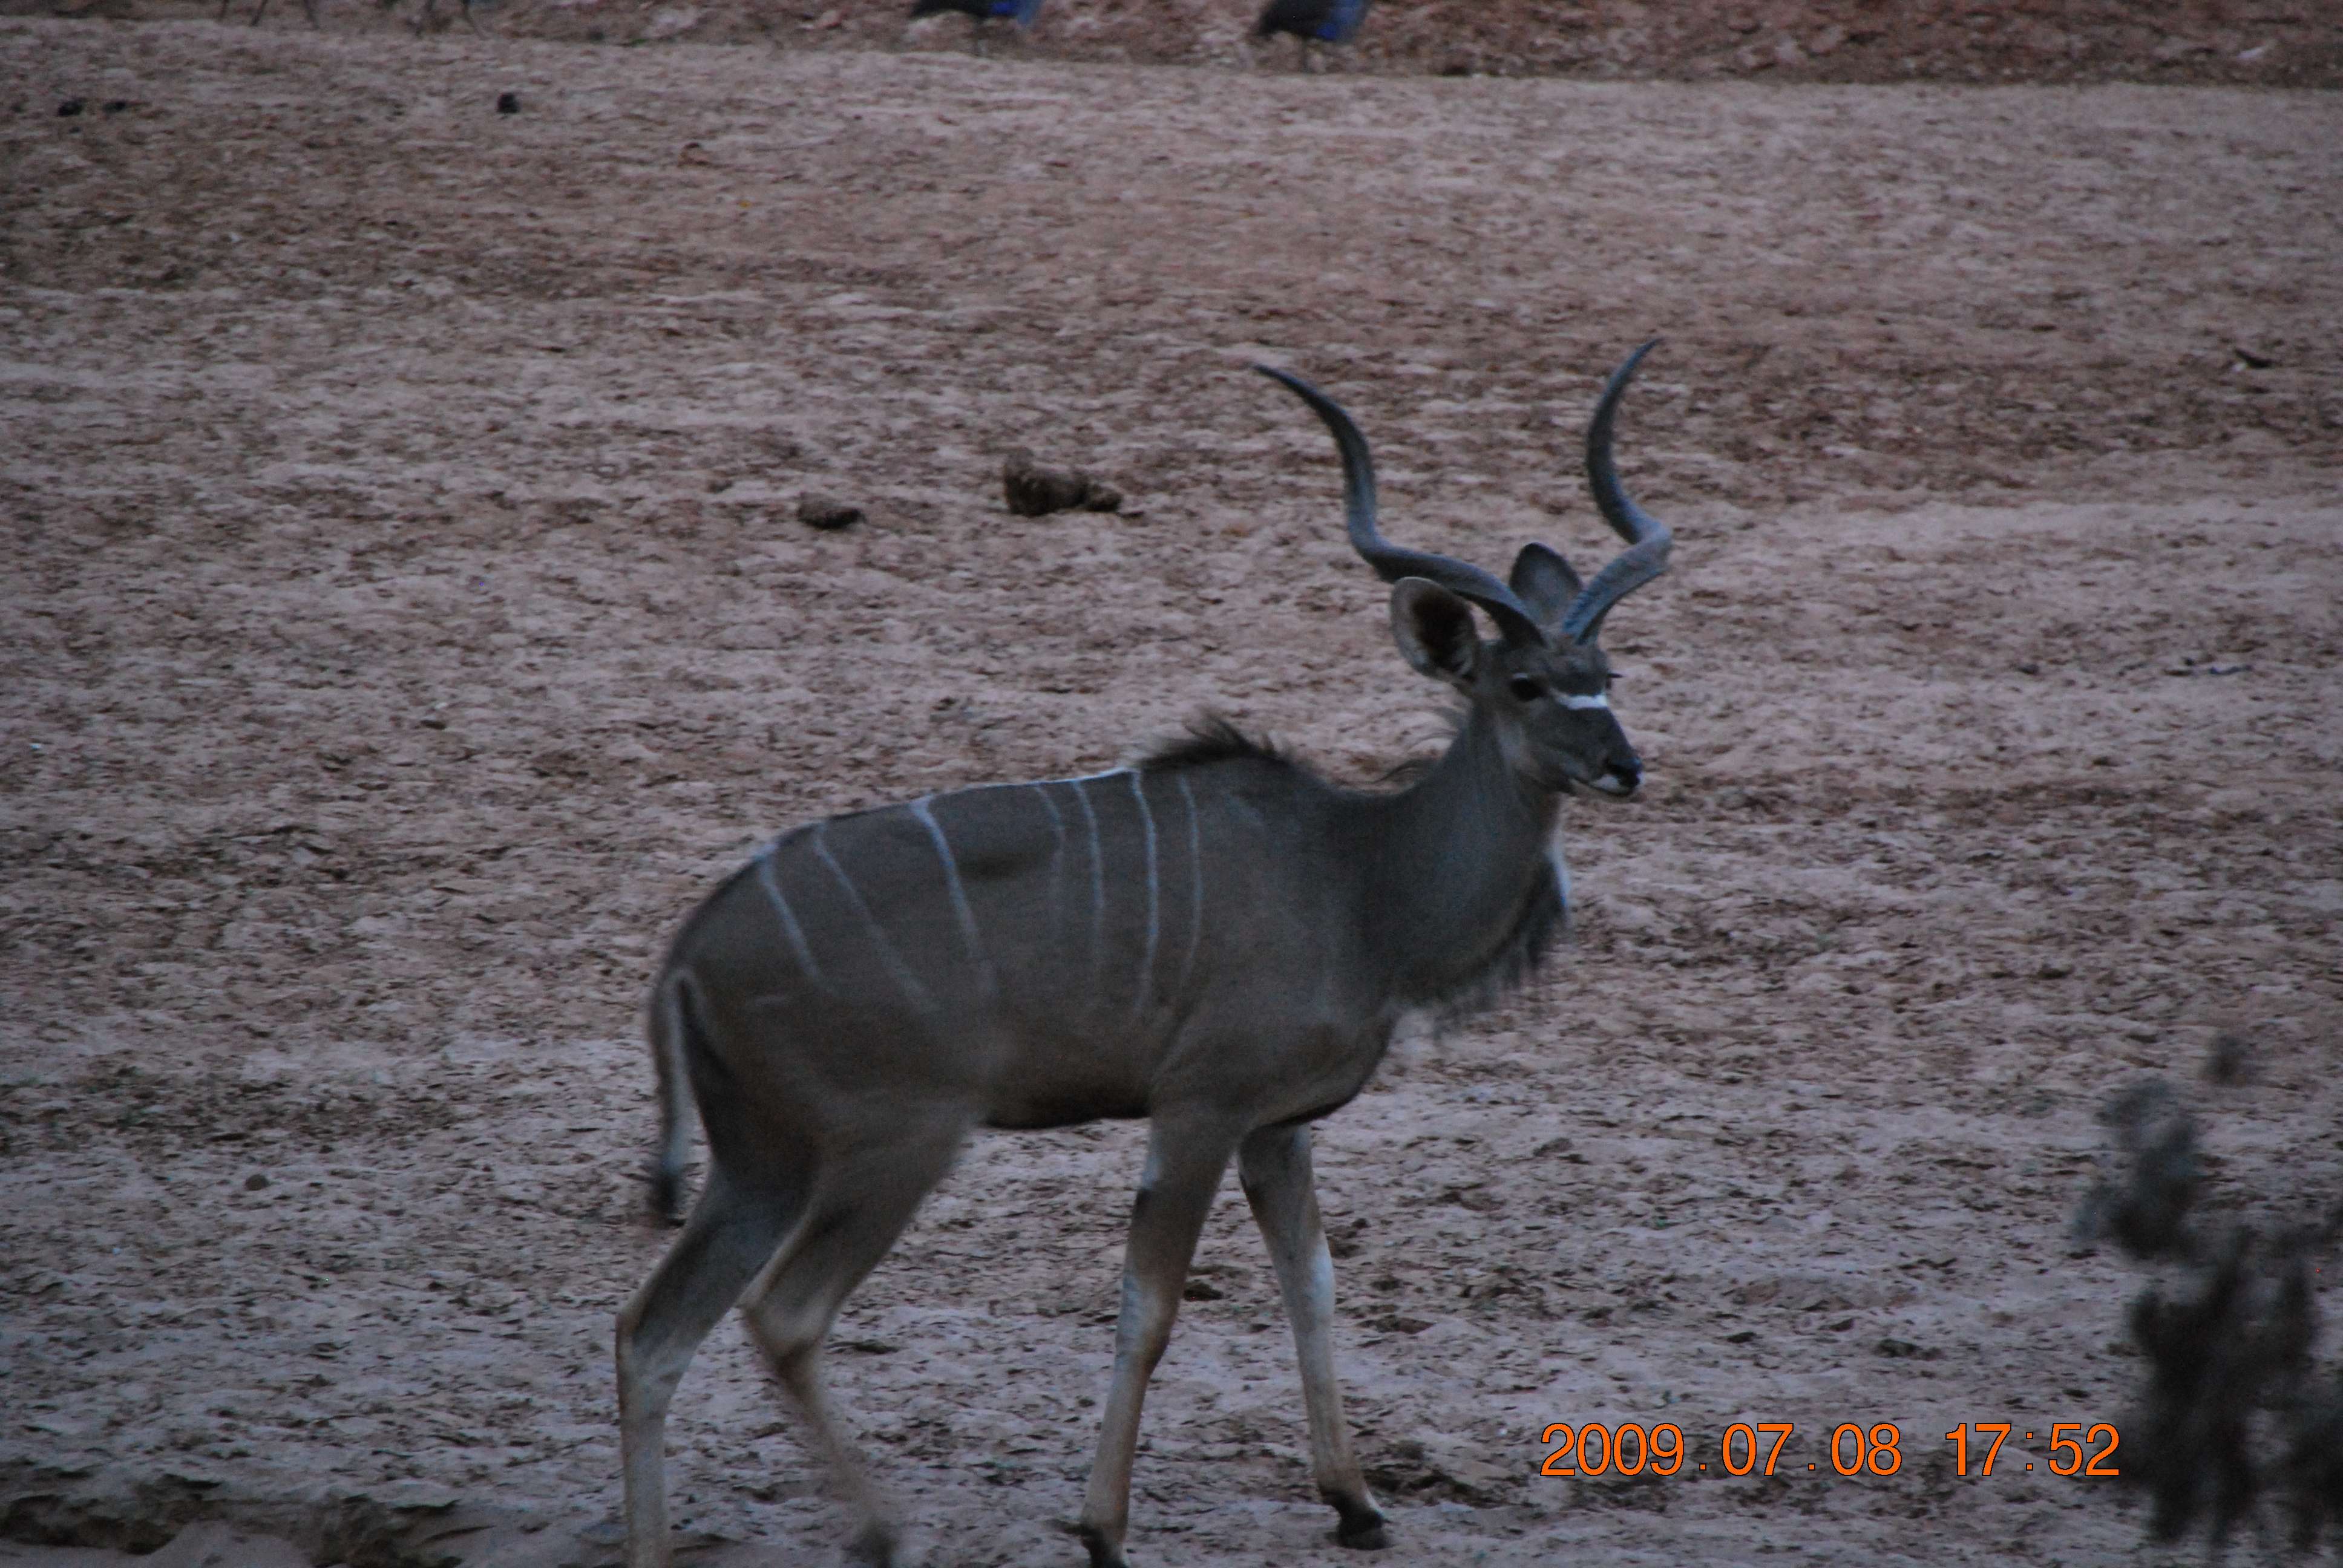 Samburu - Kenia una experiencia inolvidable (3)